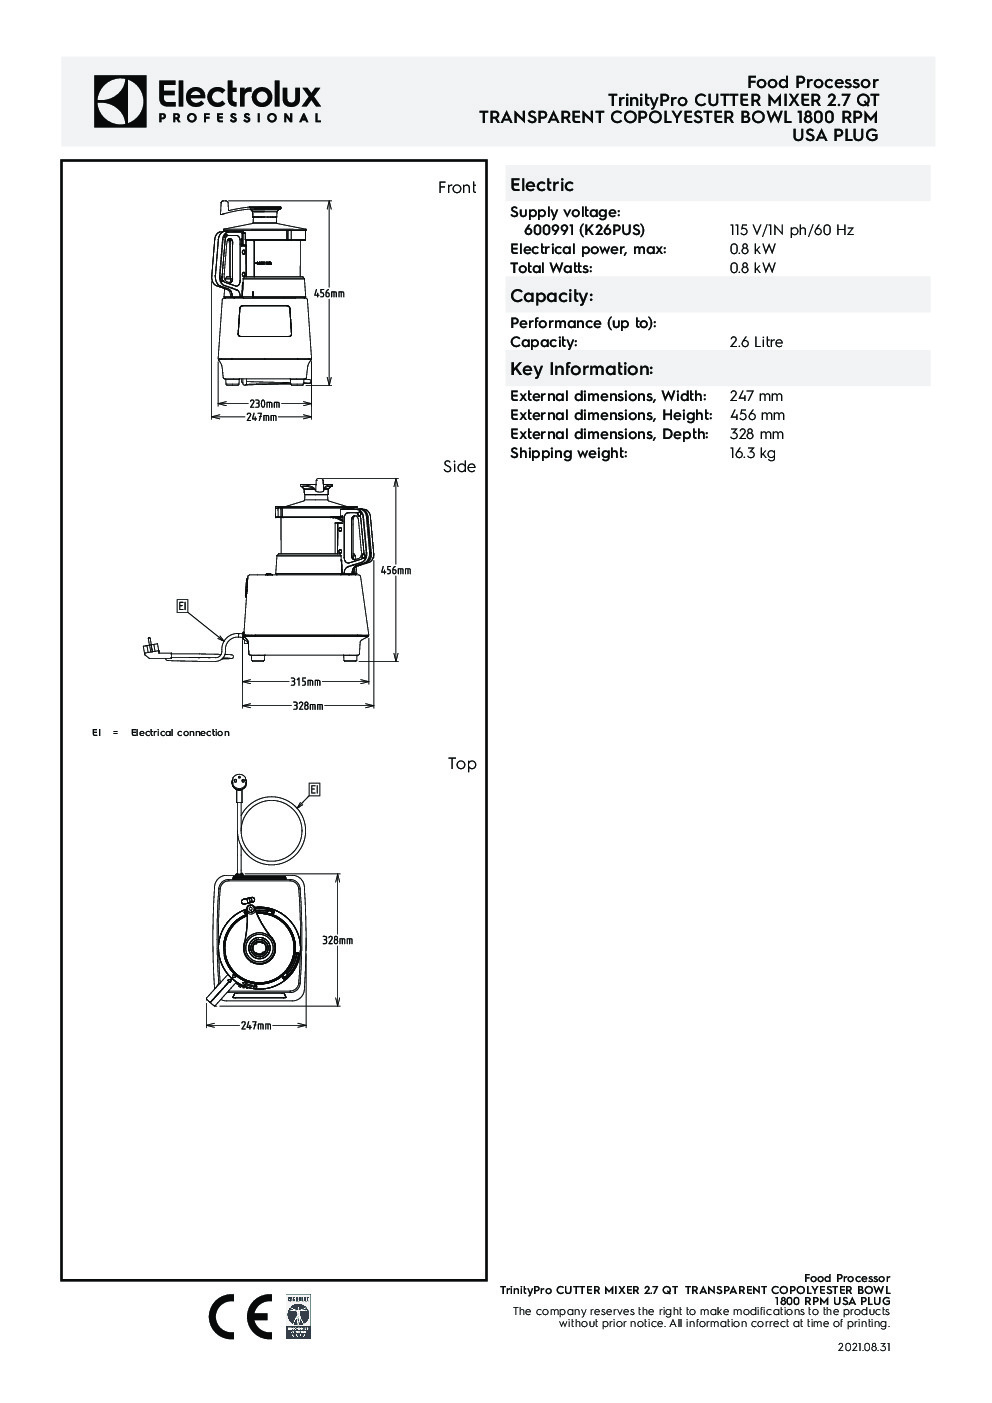 Electrolux Professional 600991 Vertical Cutter VCM Mixer